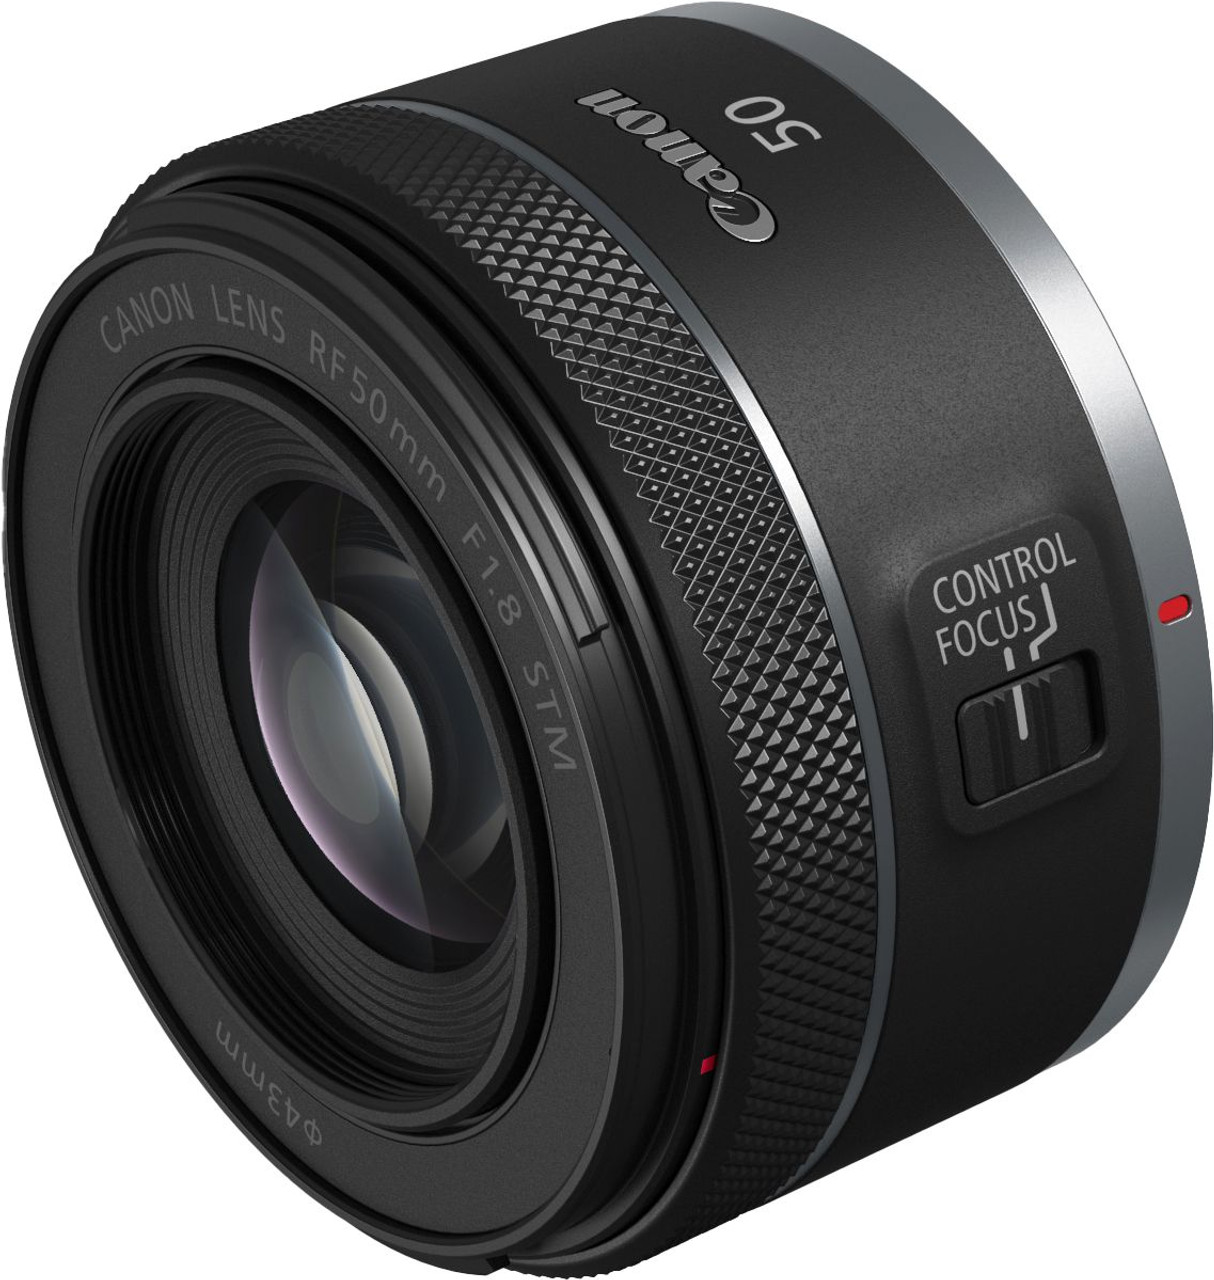 Canon - RF 50mm f/1.8 STM Standard Prime Lens for RF Mount Cameras - Black